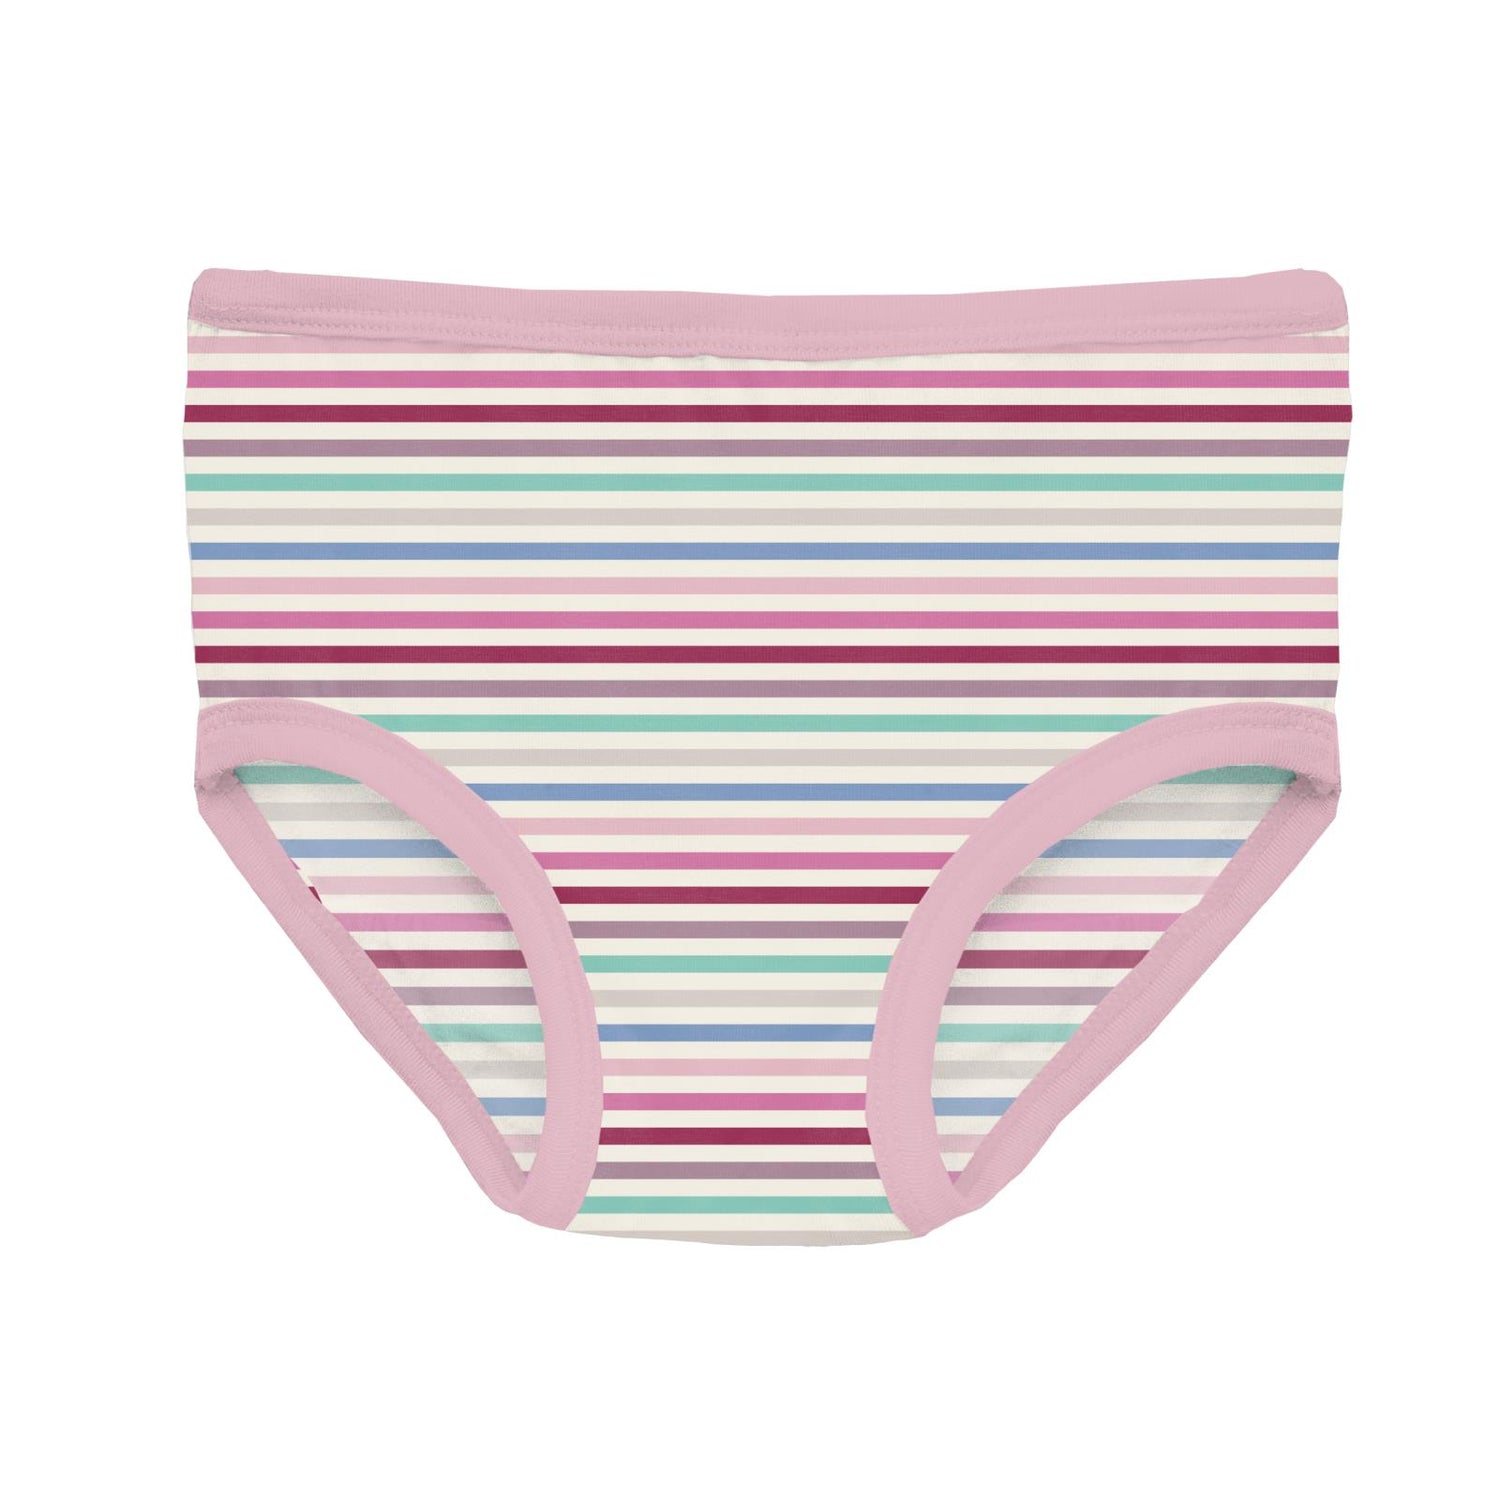 Print Girl's Underwear in Make Believe Stripe